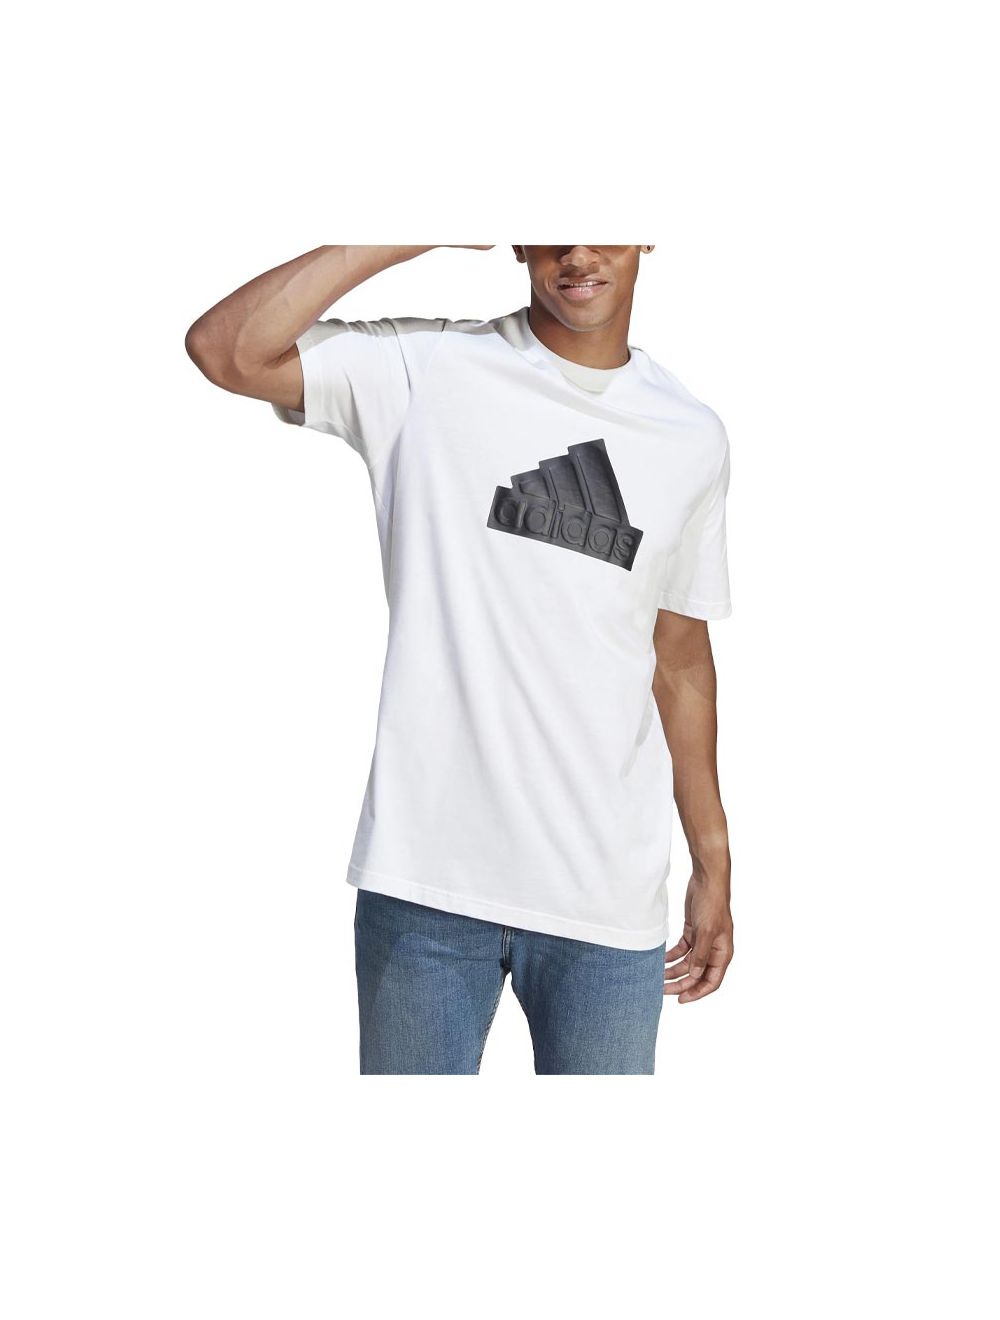 Performance White of Badge Sport adidas Icons Mens T-shirt